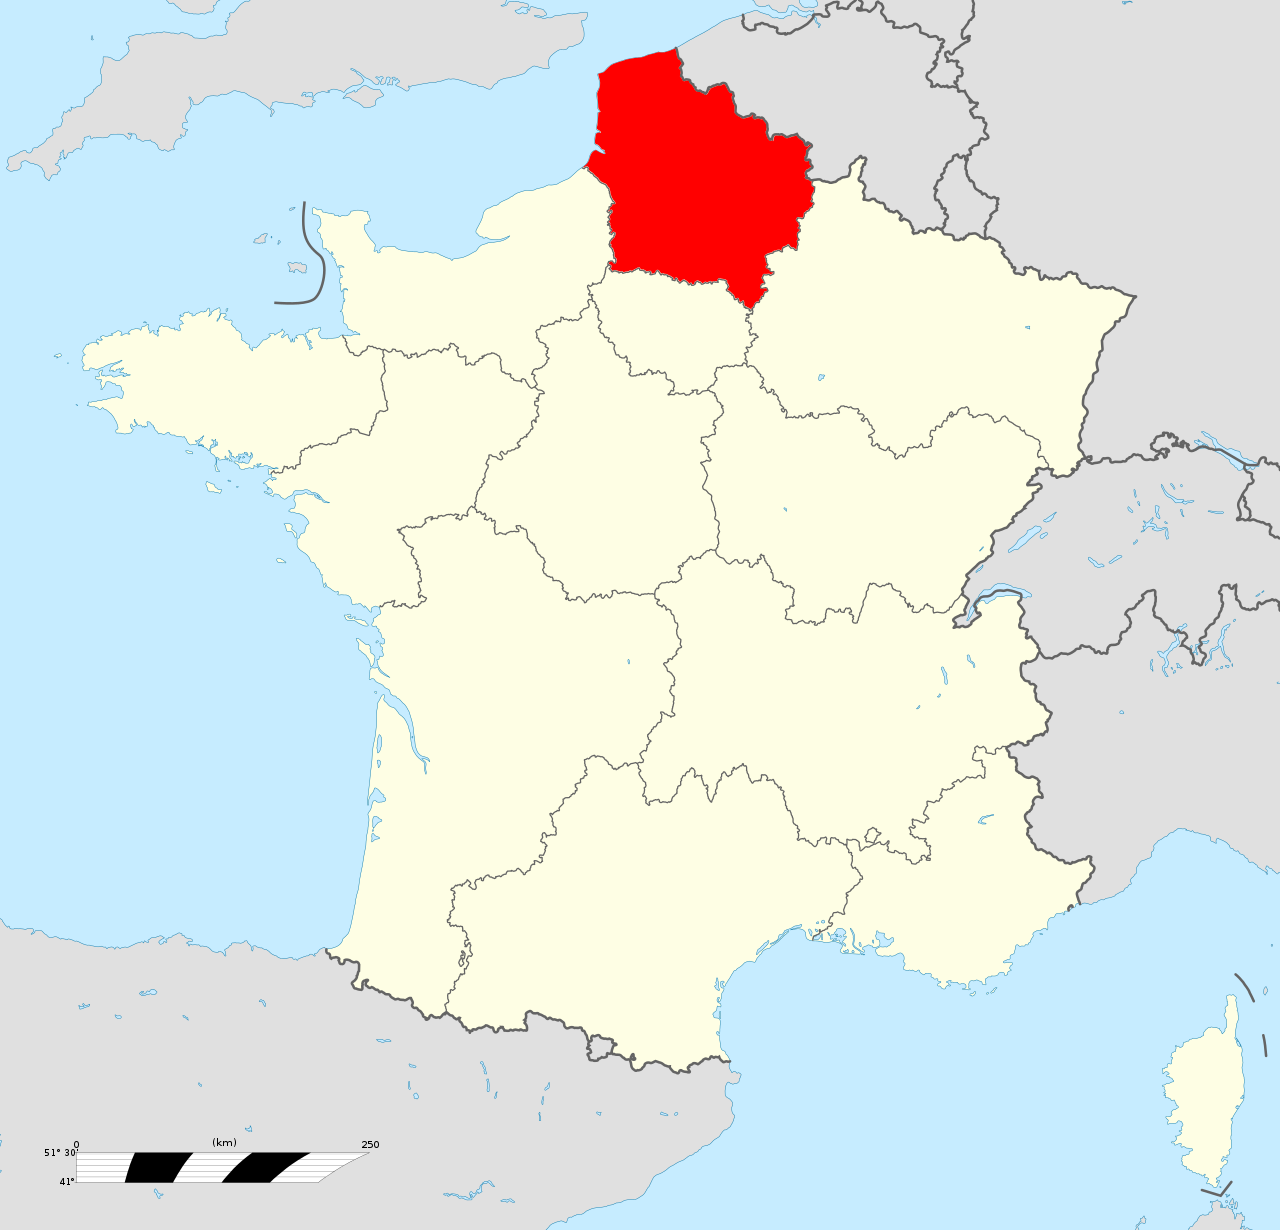 Checkerboard House Urbex locatie in of rond de regio Hauts-de-France (Somme), France